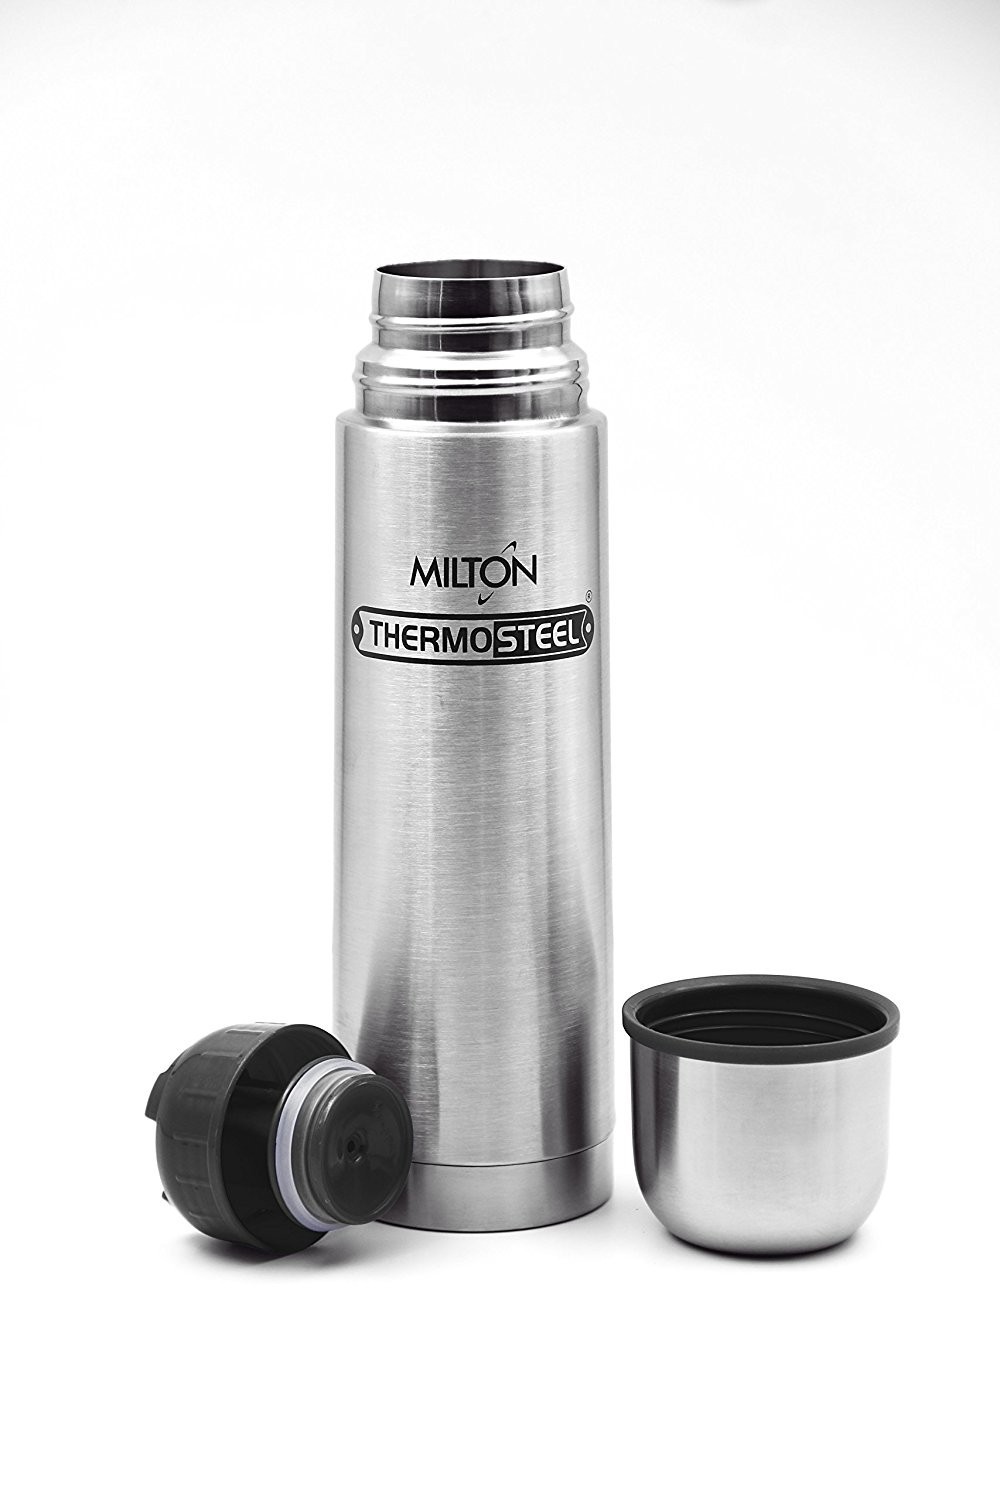 milton stainless steel water bottle 1000ml price